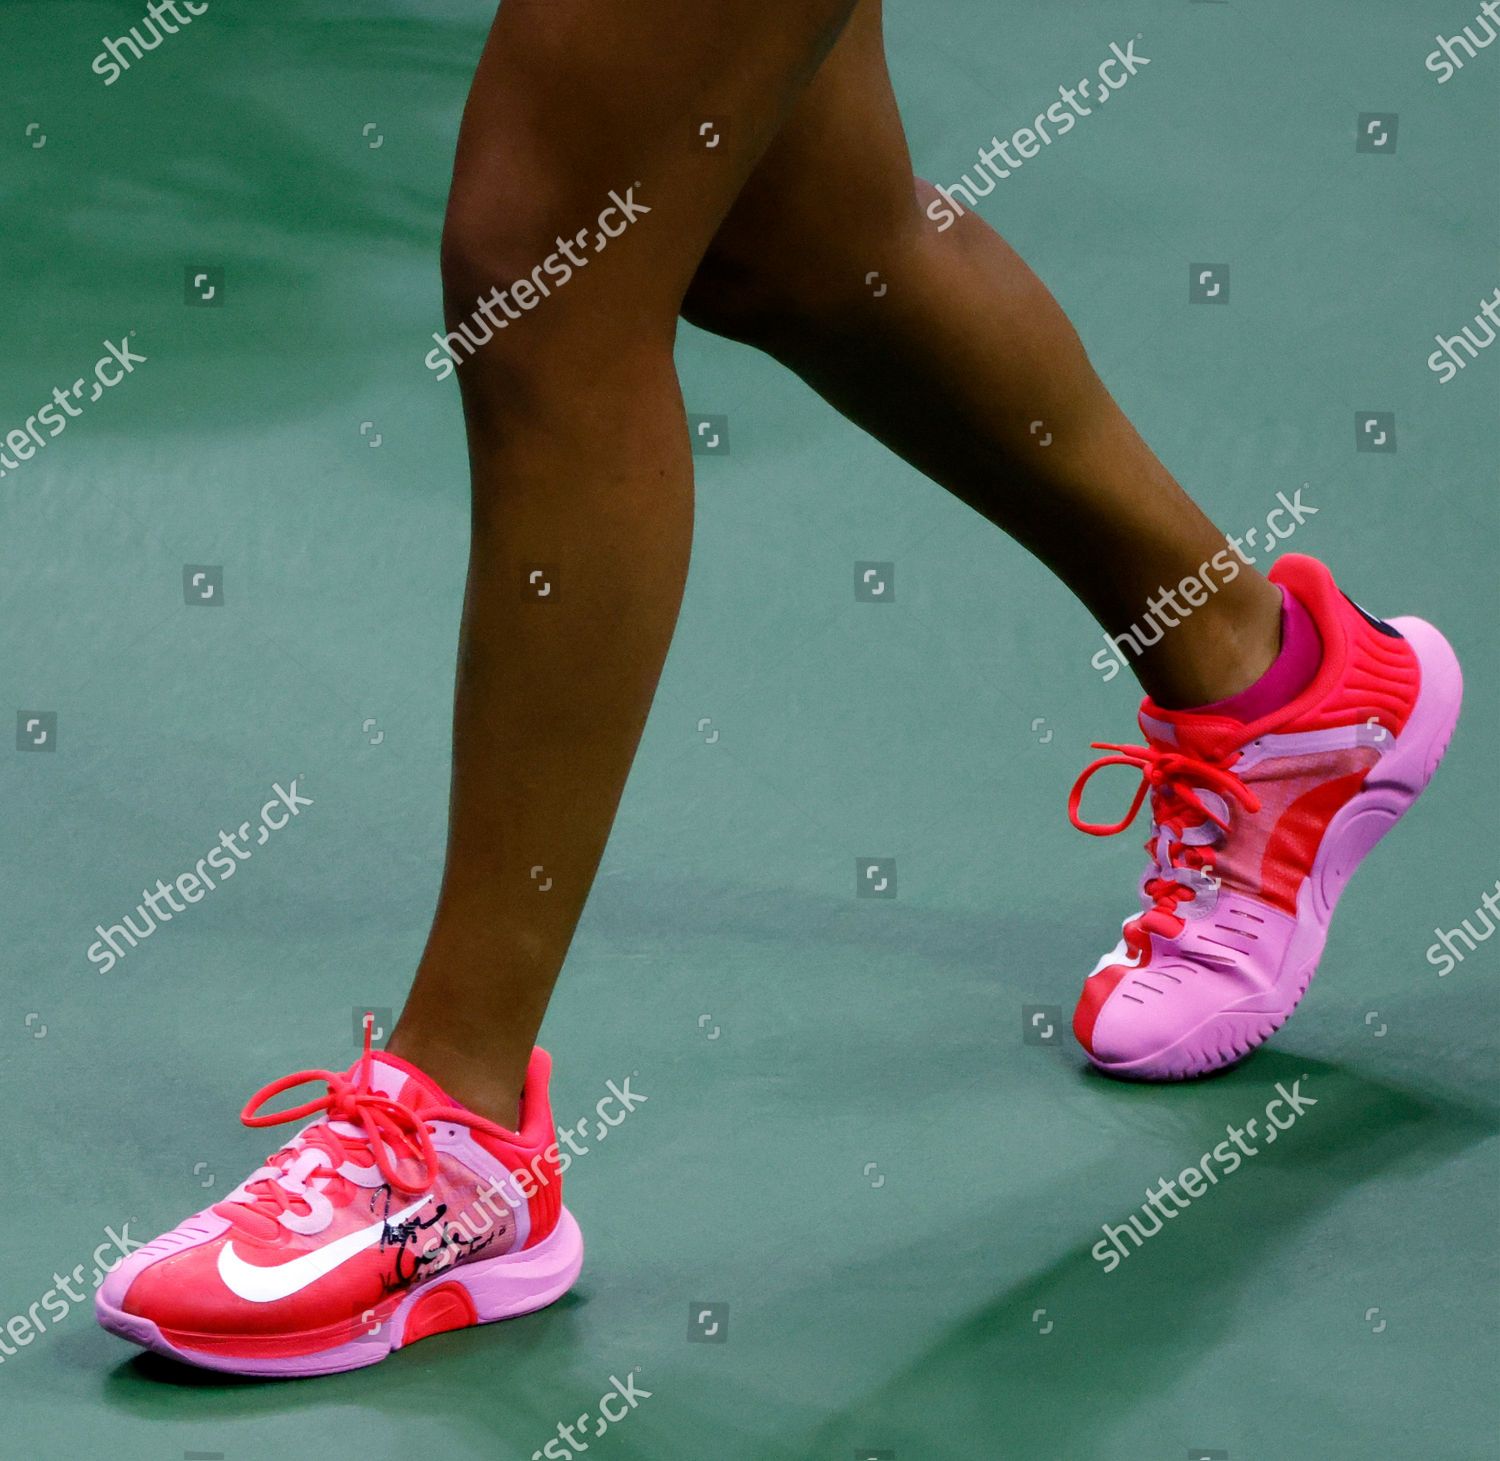 Naomi Osaka Japan Tennis Shoes Seen While Editorial Stock Photo Stock Image Shutterstock